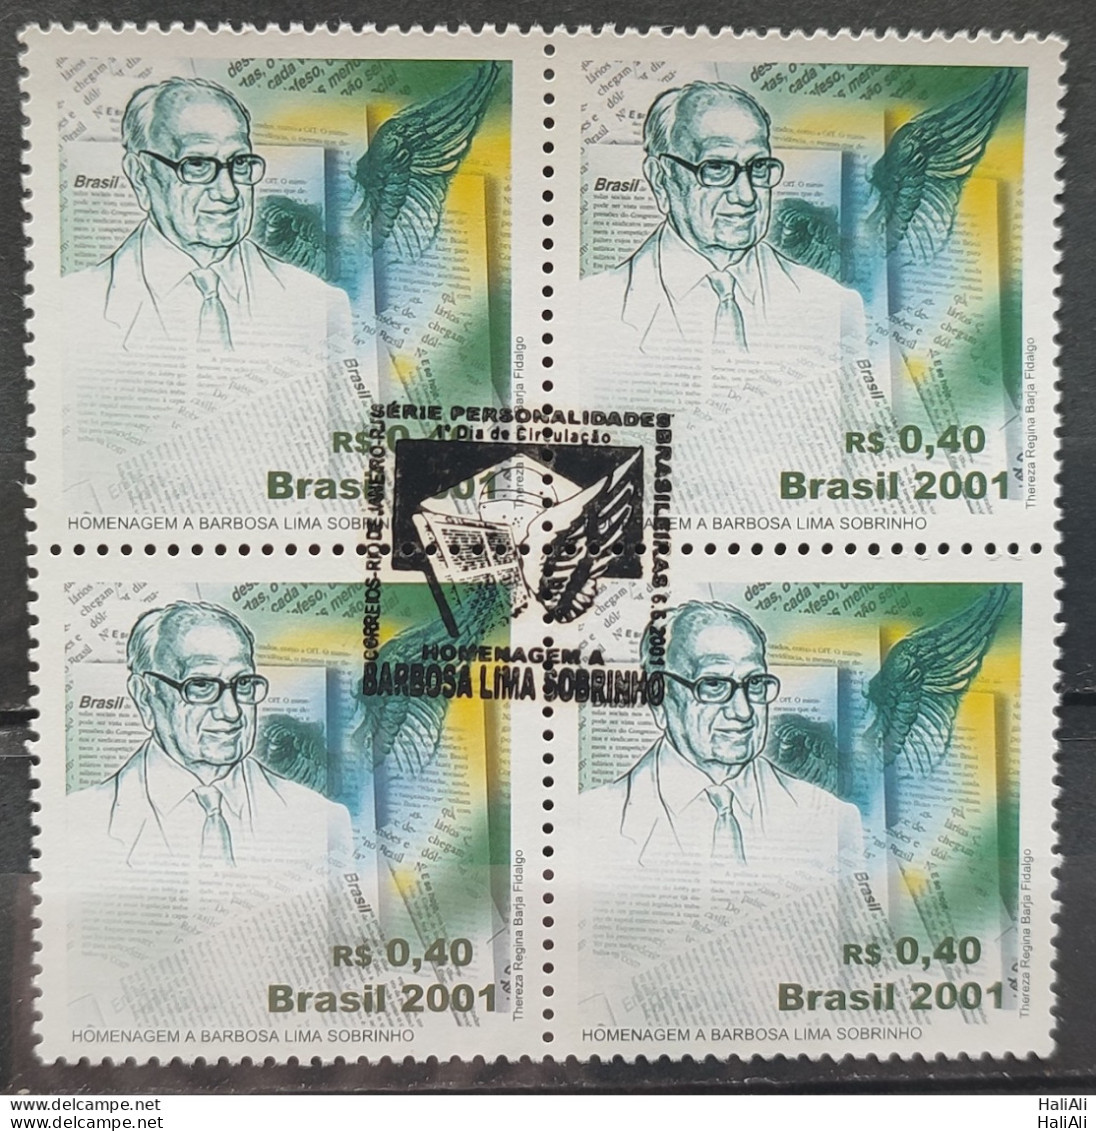 C 2386 Brazil Stamp Barbosa Lima Sobrinho Journalism 2001  BLOCK OF 4 CBC RJ - Unused Stamps